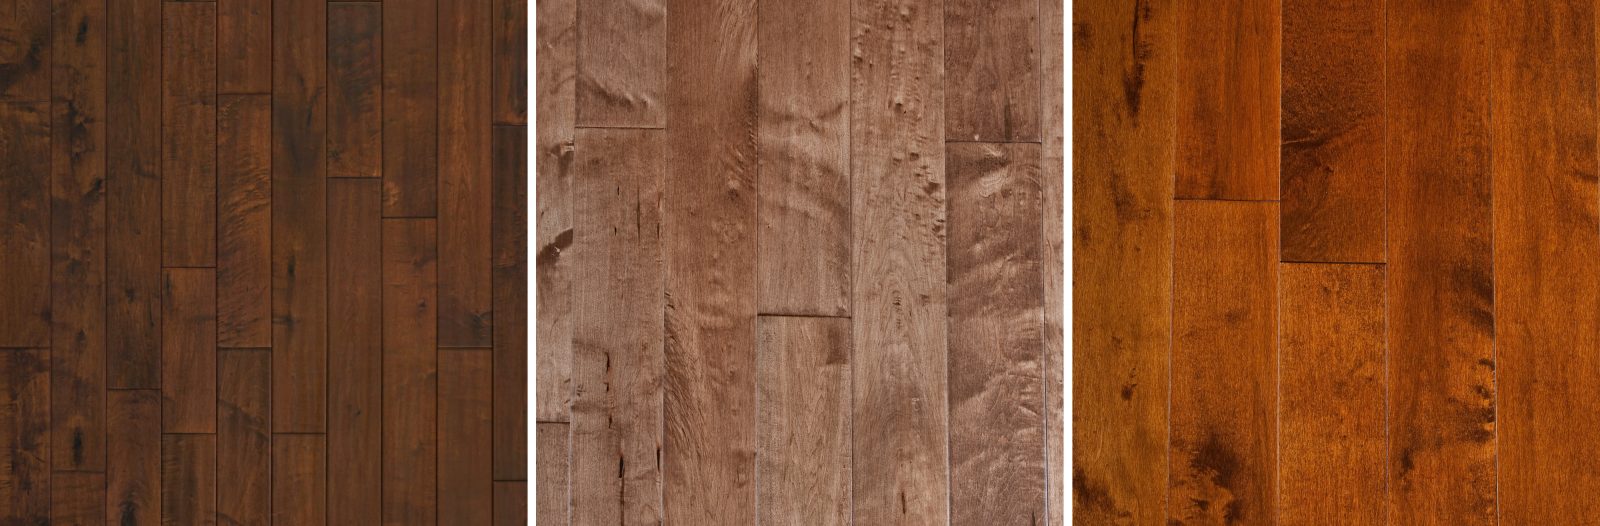 Comparison of Maple Hardwood Flooring